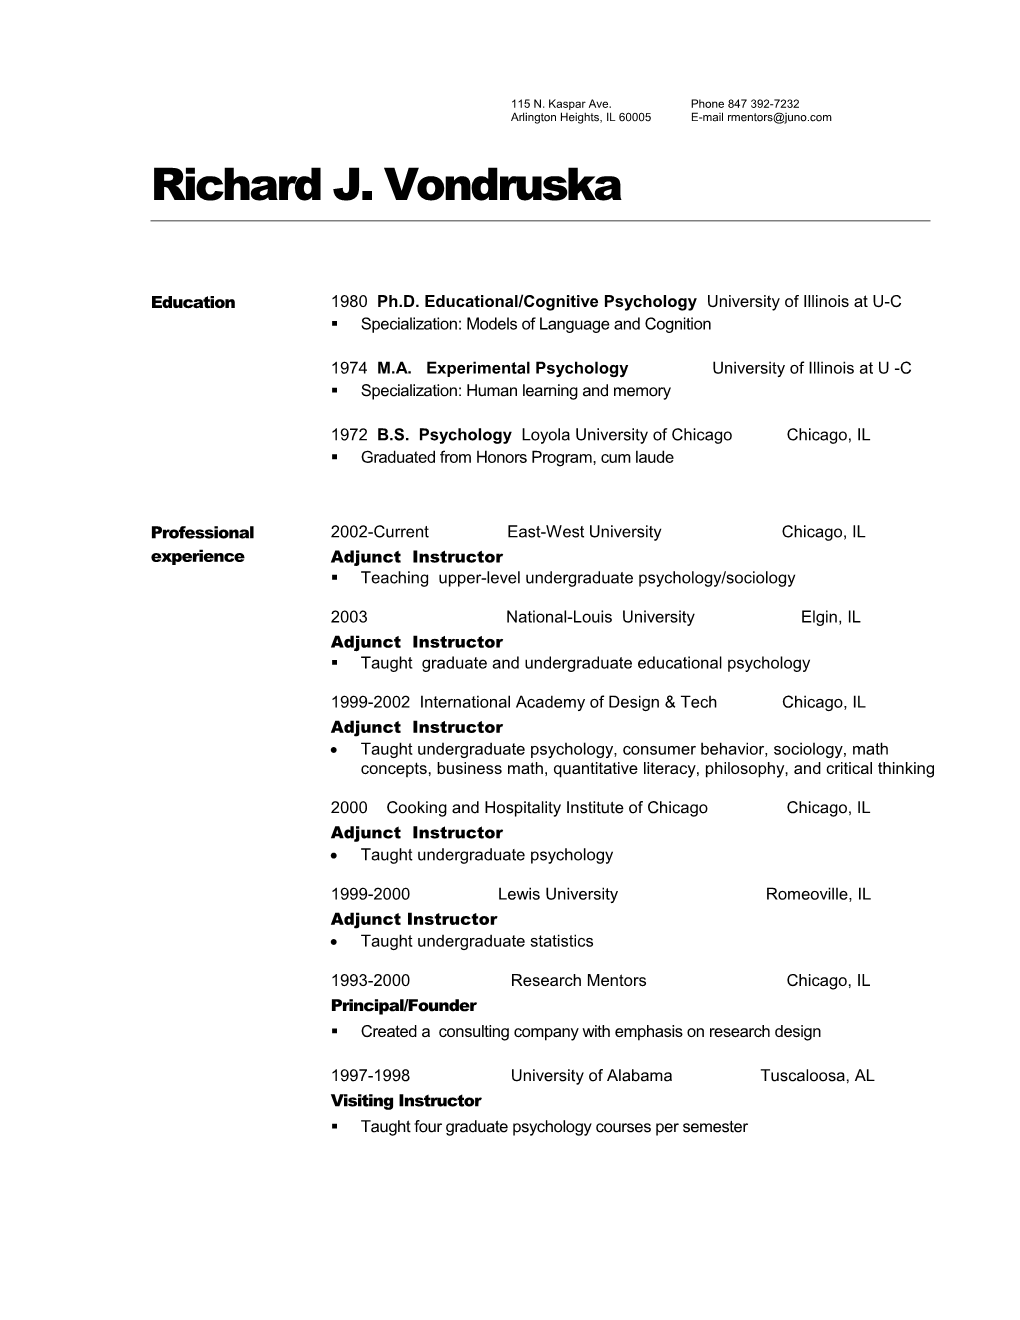 Richard J. Vondruska